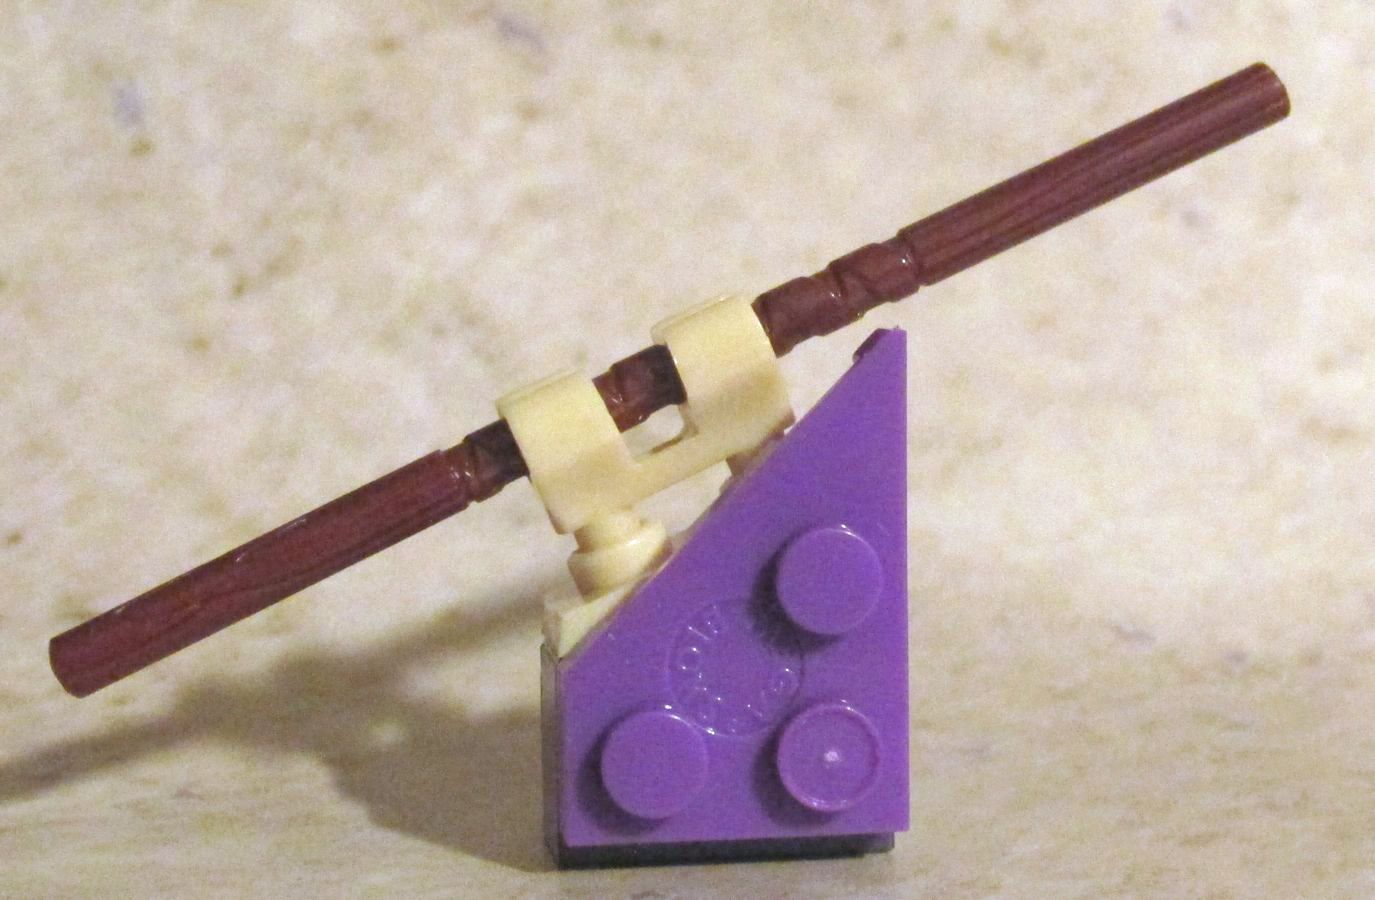 Donatello's weapon